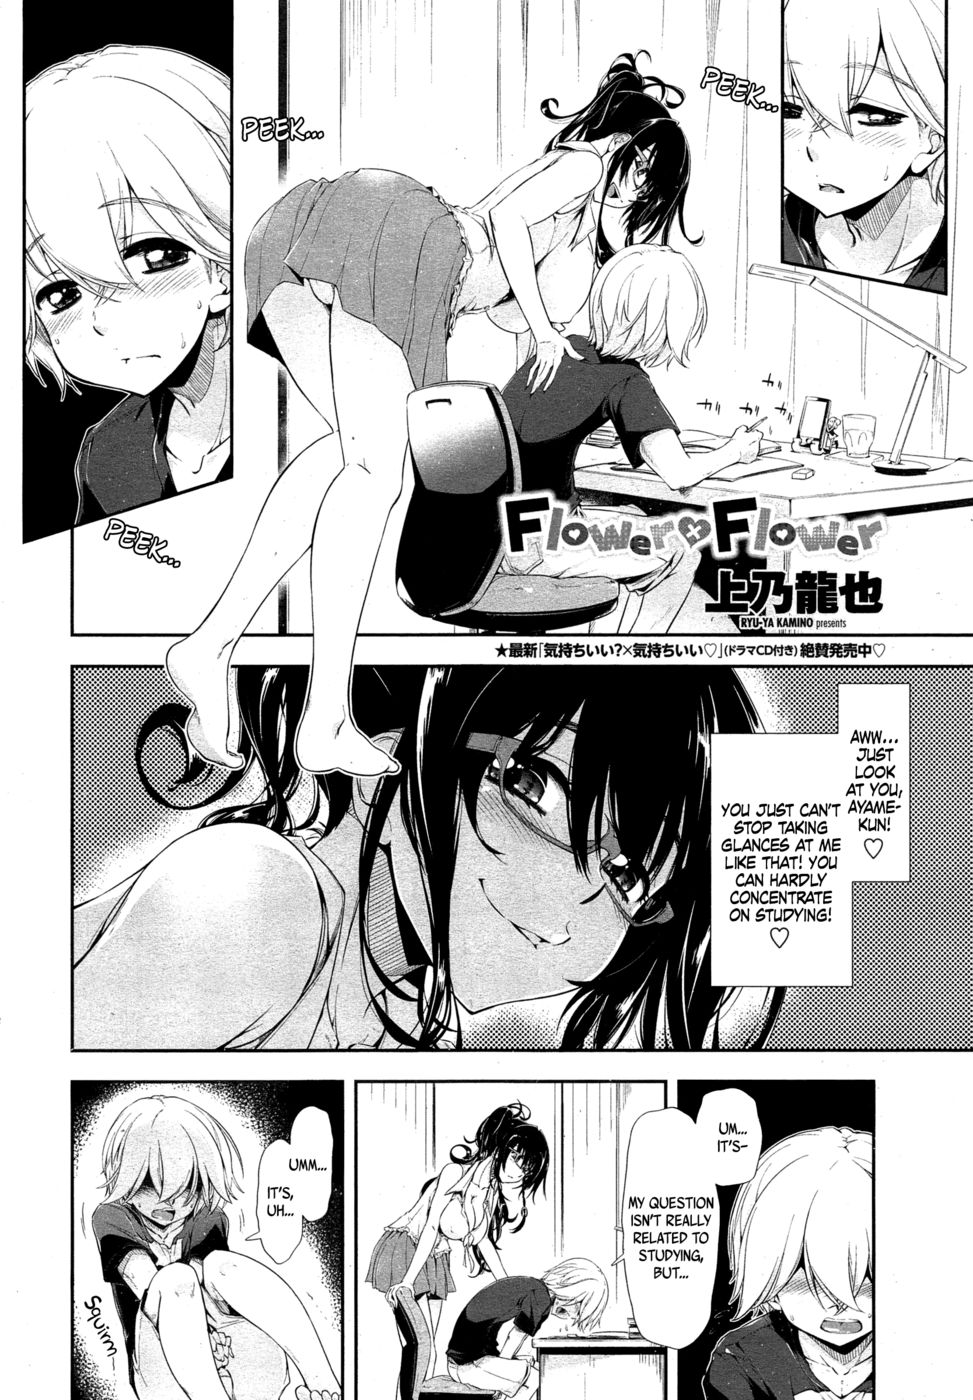 Hentai Manga Comic-Flower X Flower-Read-2